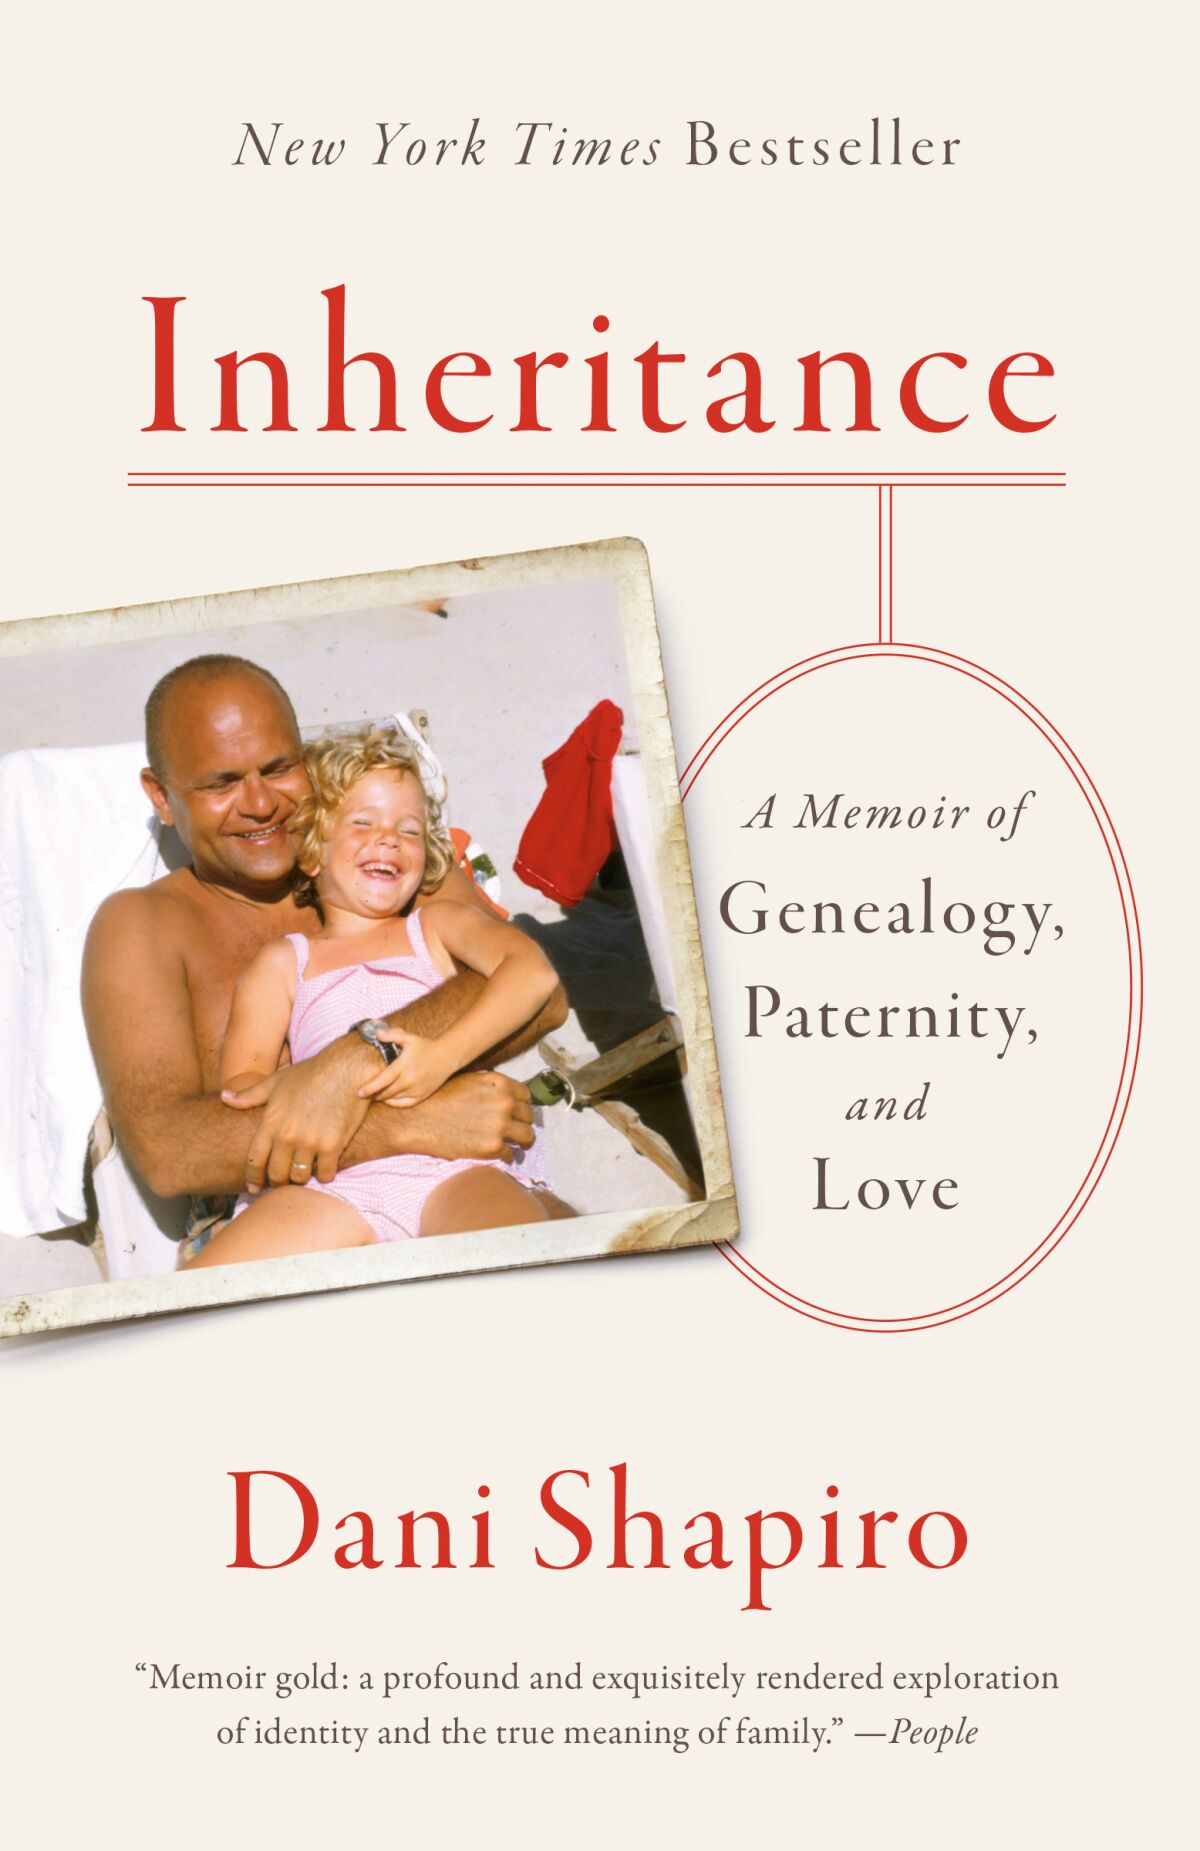 A book jacket for "Inheritance," by Dani Shapiro. Credit: Anchor